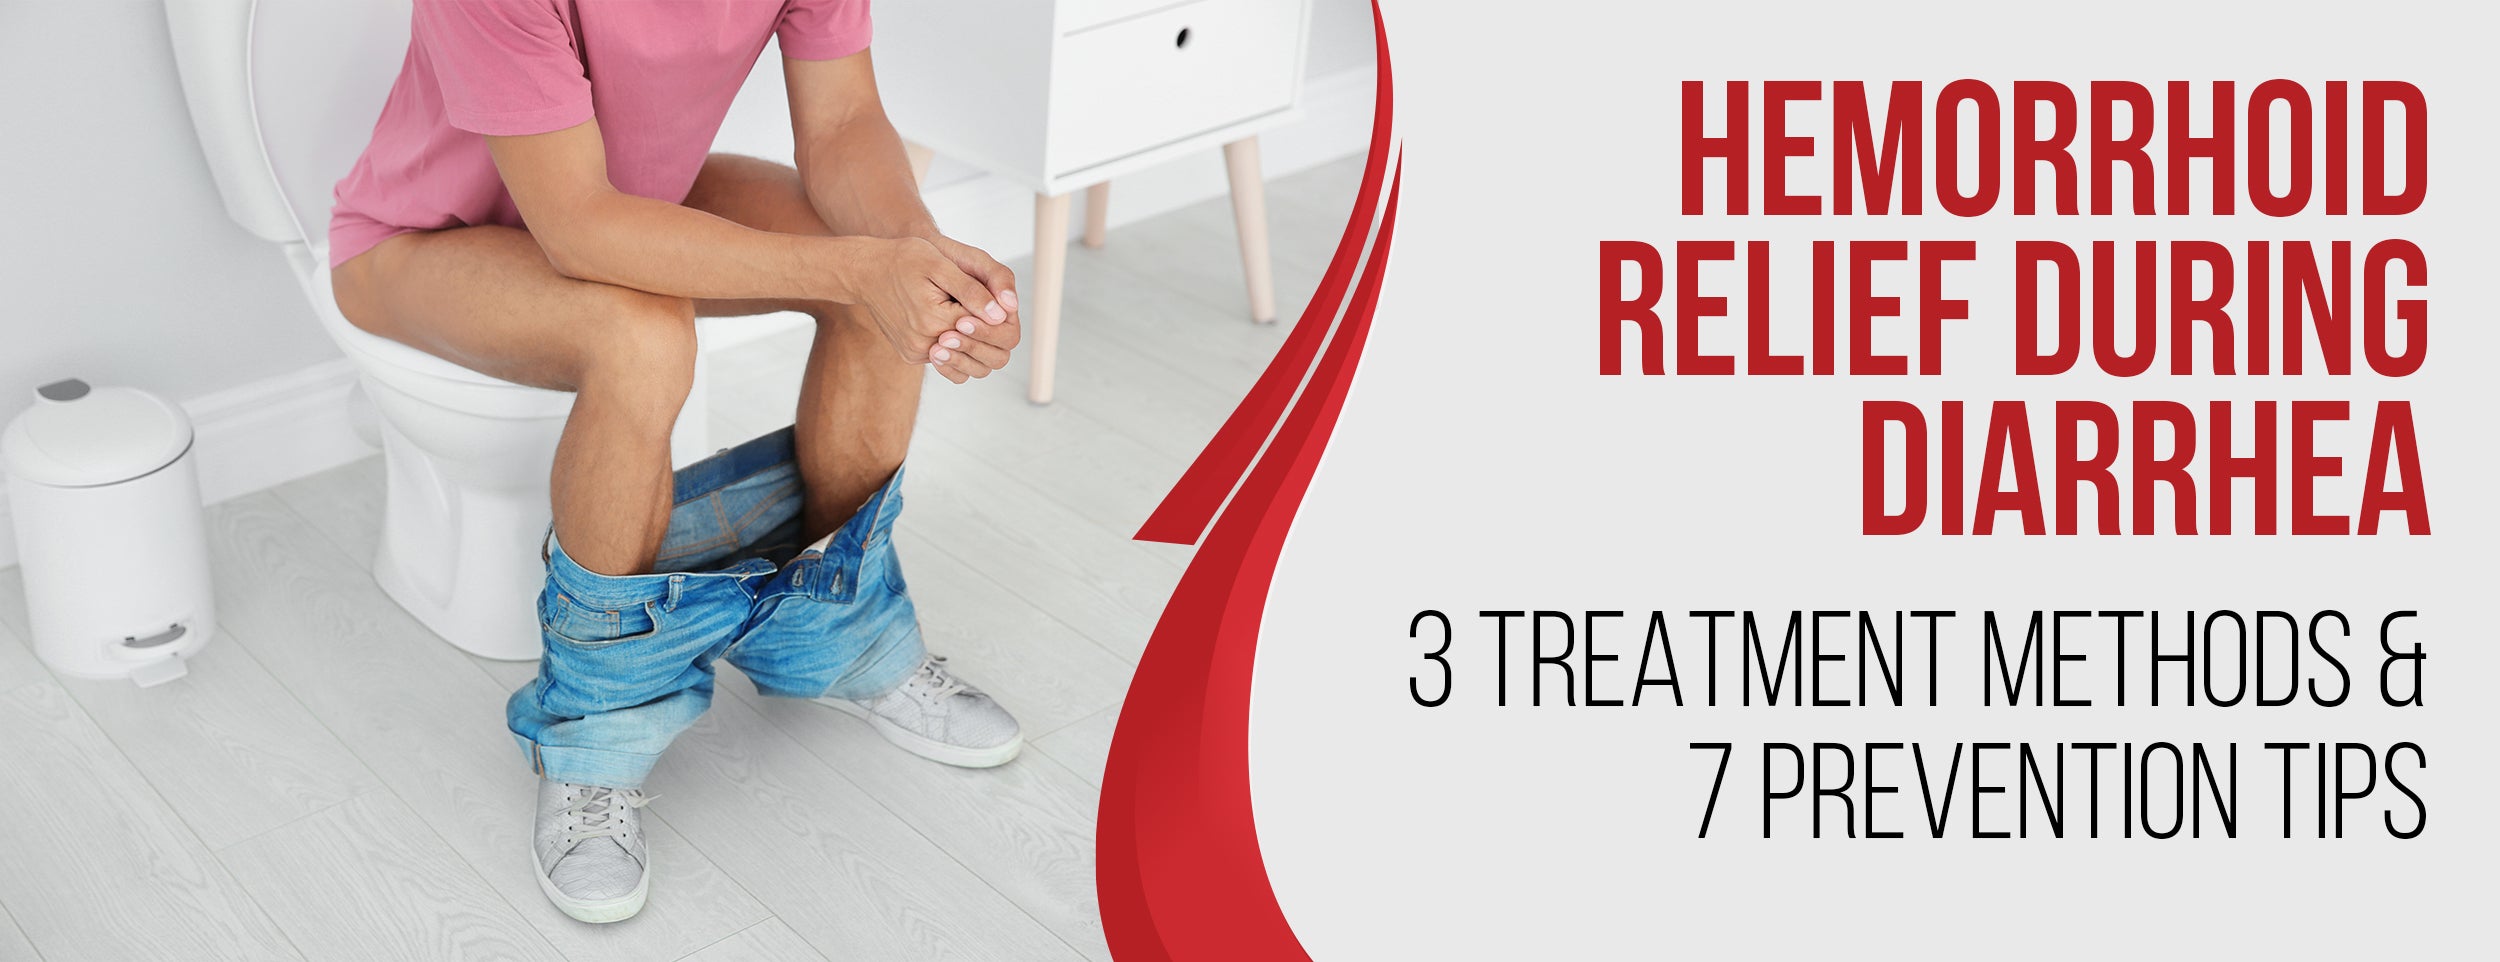 3 Diarrhea Hemorrhoids Relief Methods & Prevention Tips.